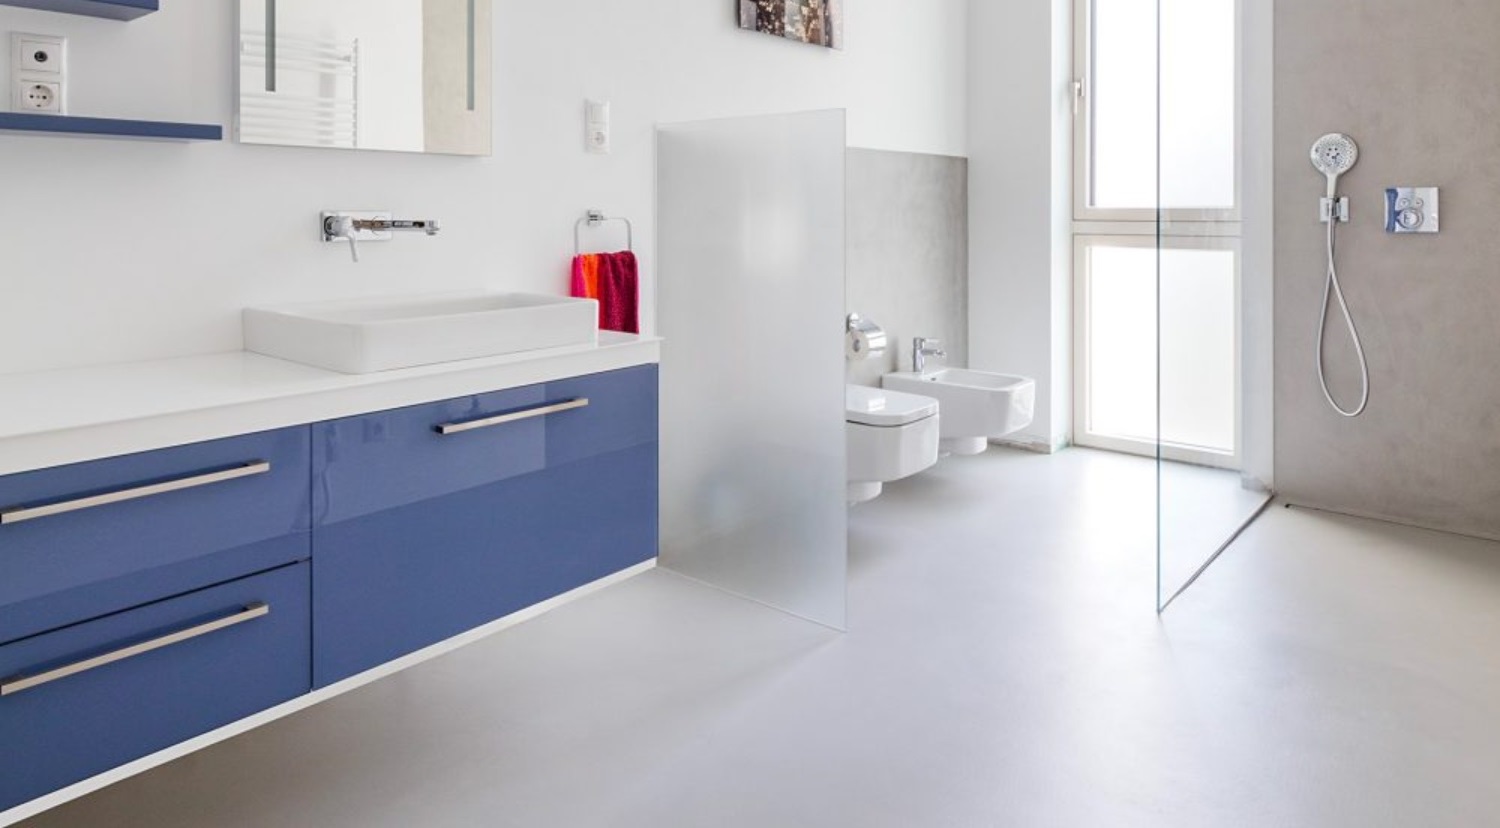 Bathroom design without tiles: 4 creative alternatives